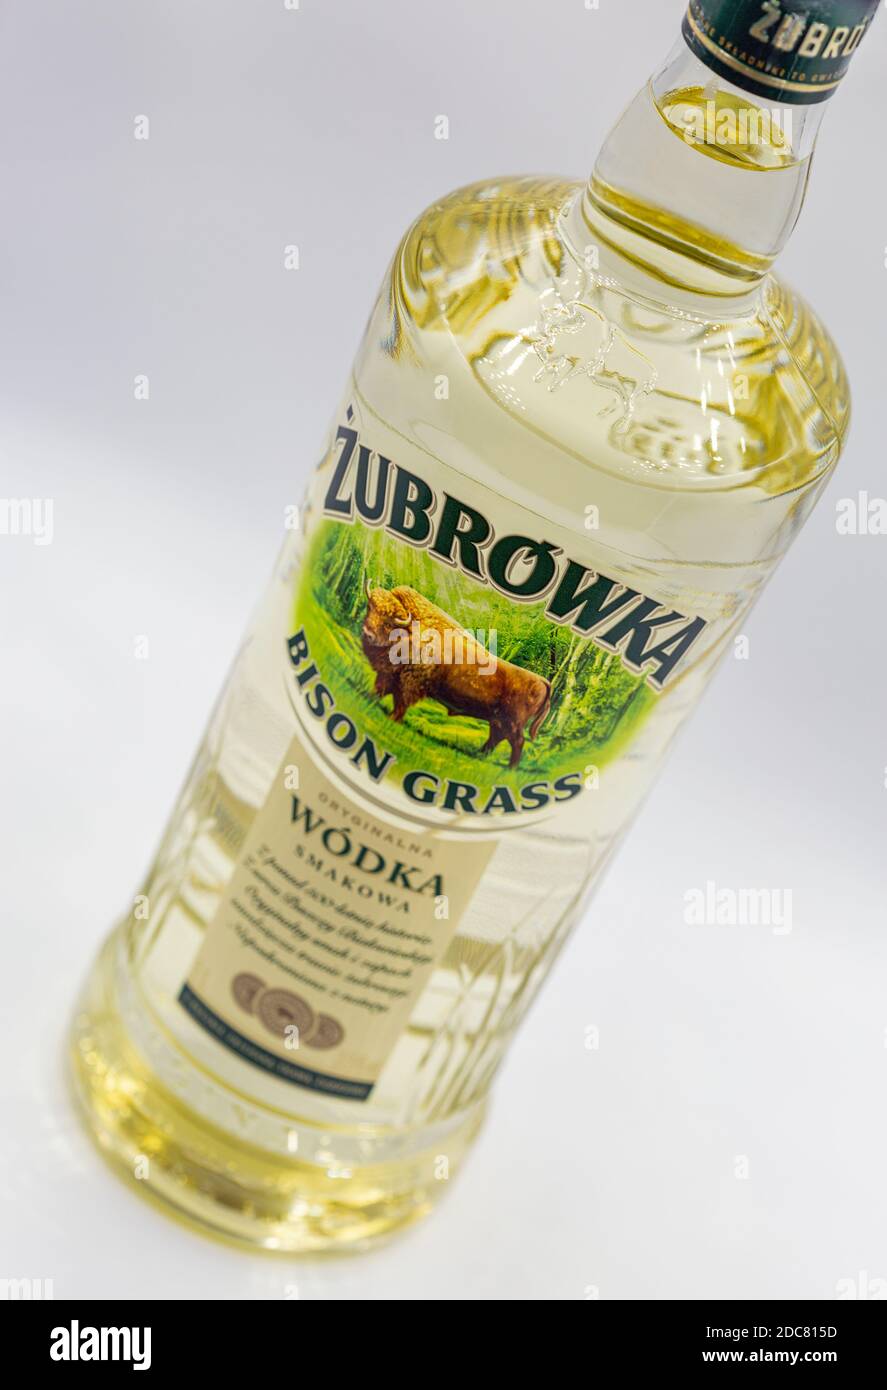 KYIV, UKRAINE - OCTOBER 23, 2020: Zubrowka Bison Grass vodka bottle closeup against white background. It is a flavored Polish vodka liqueur, which con Stock Photo